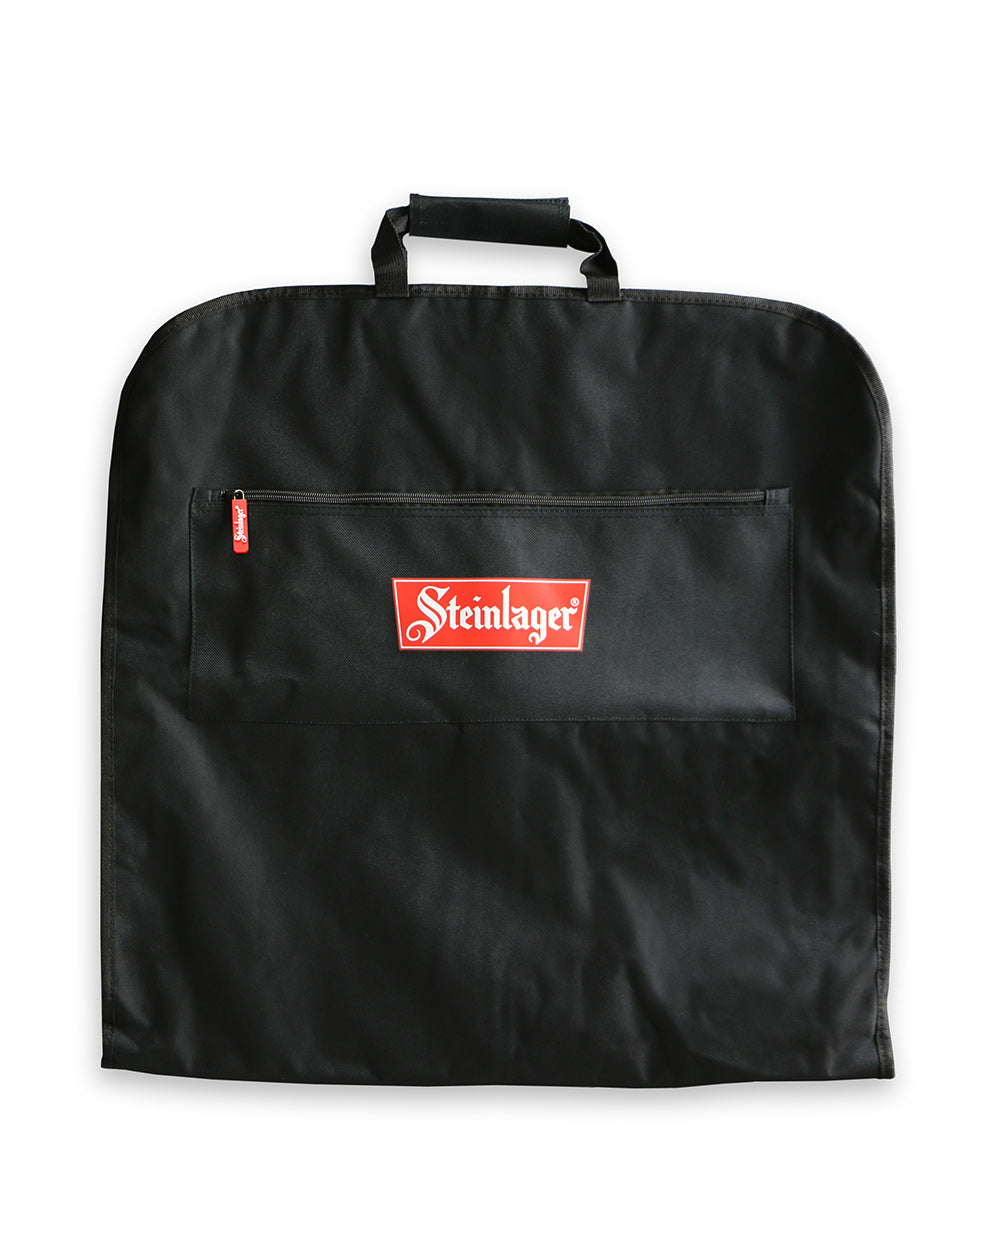 Steinlager Suit Bag -  Beer Gear Apparel & Merchandise - Speights - Lion Red - VB - Tokyo Dy merch